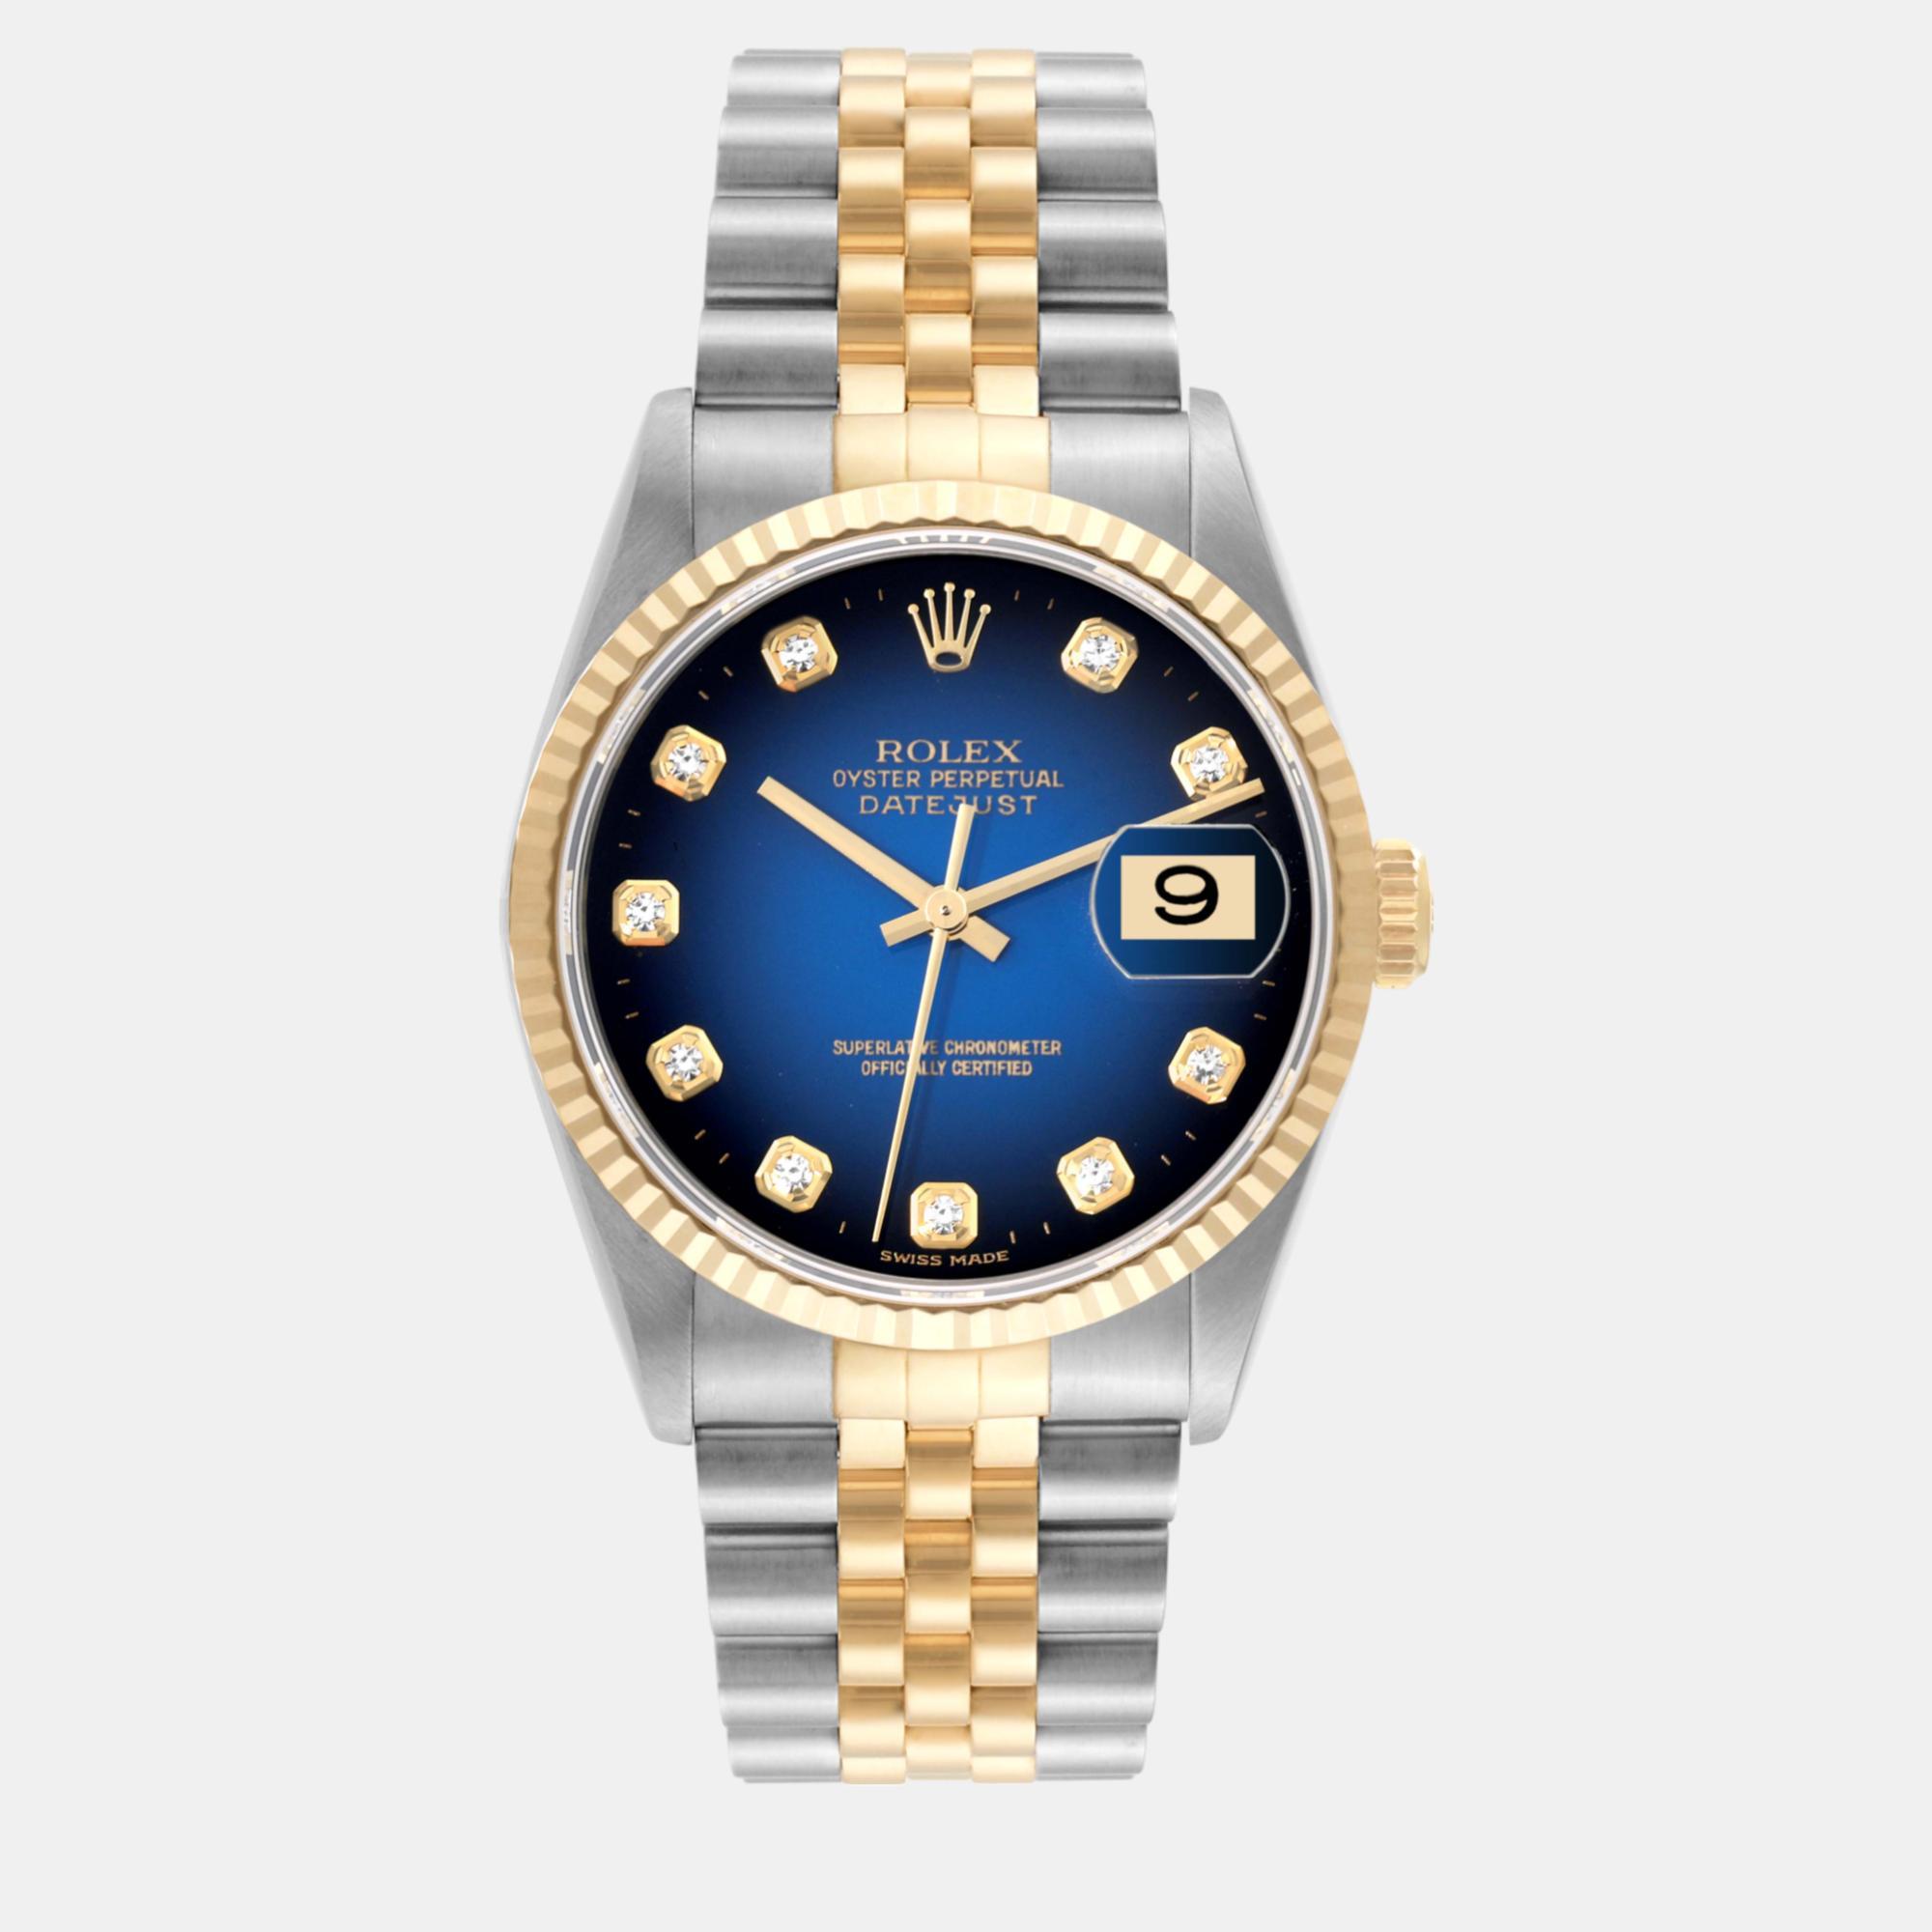 Rolex datejust blue vignette diamond dial steel yellow gold men's watch 16233 36 mm